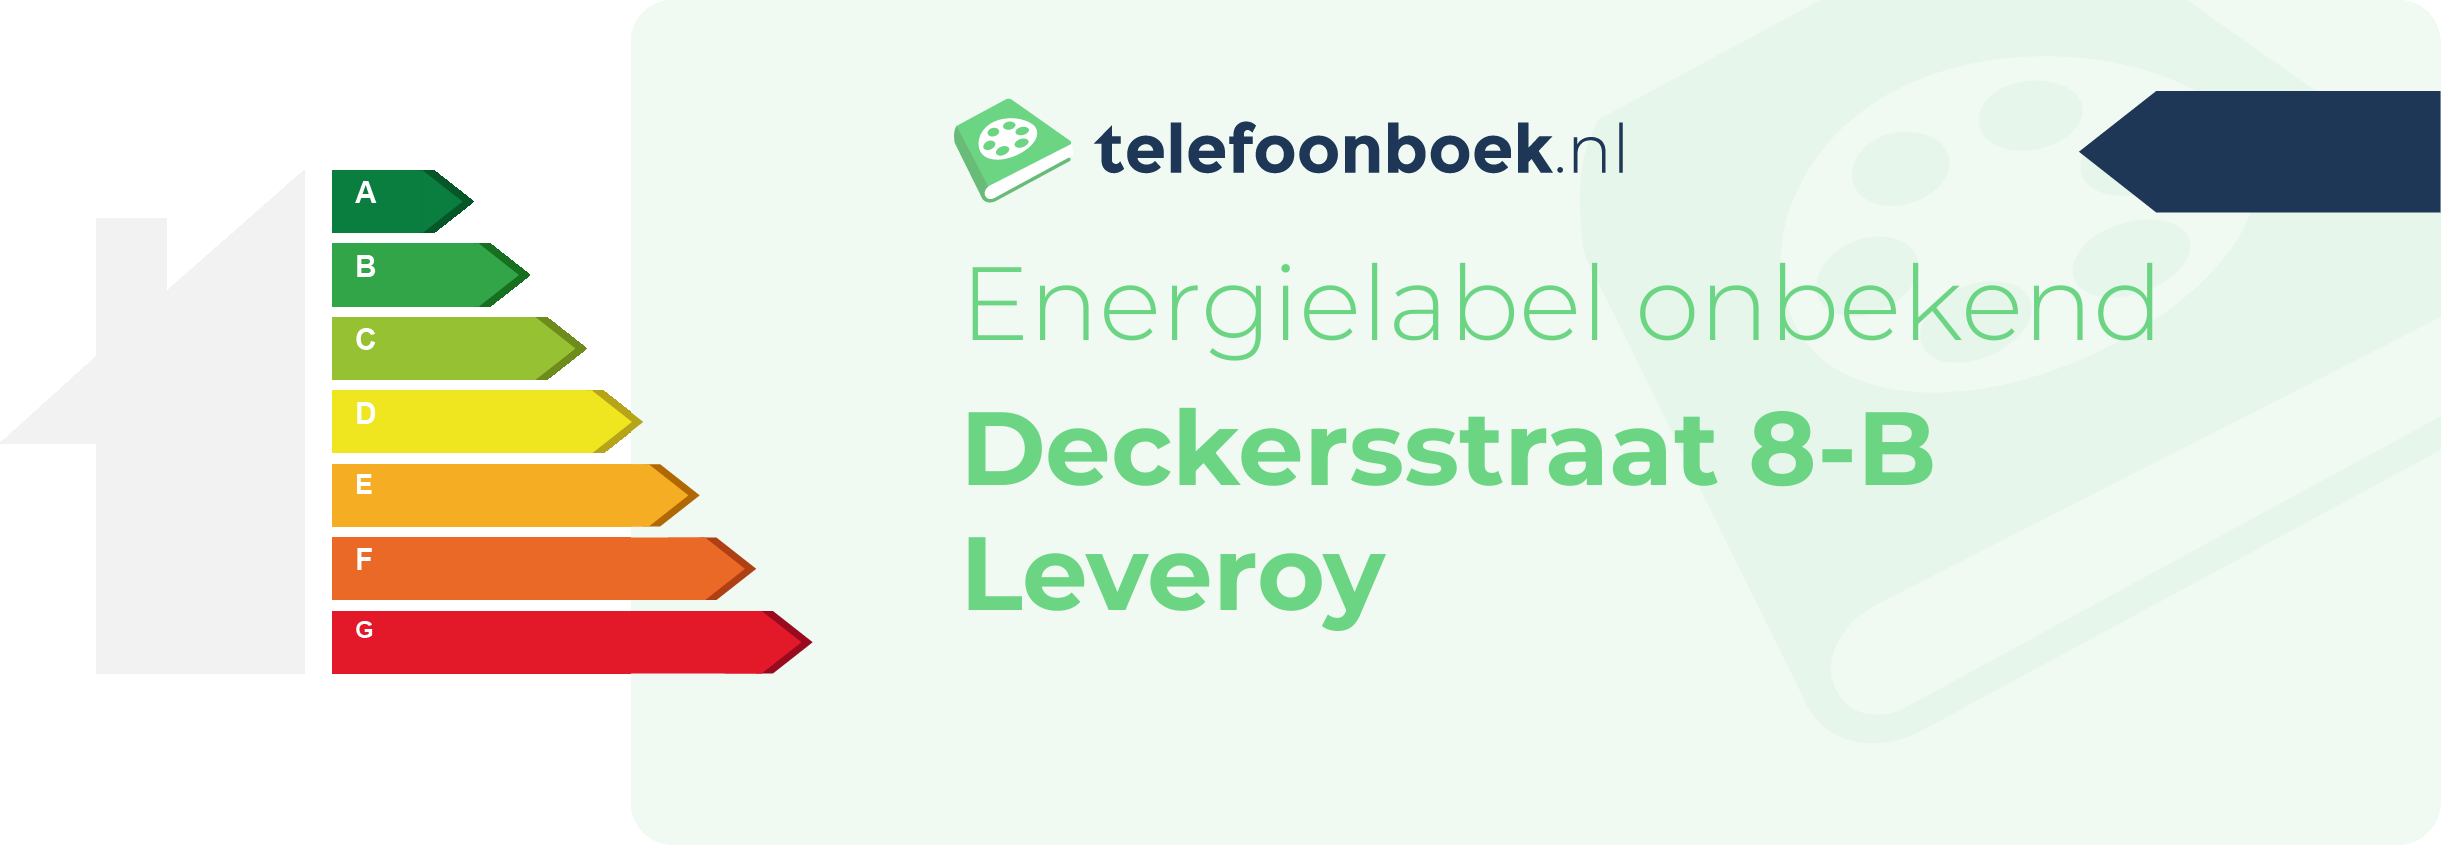 Energielabel Deckersstraat 8-B Leveroy